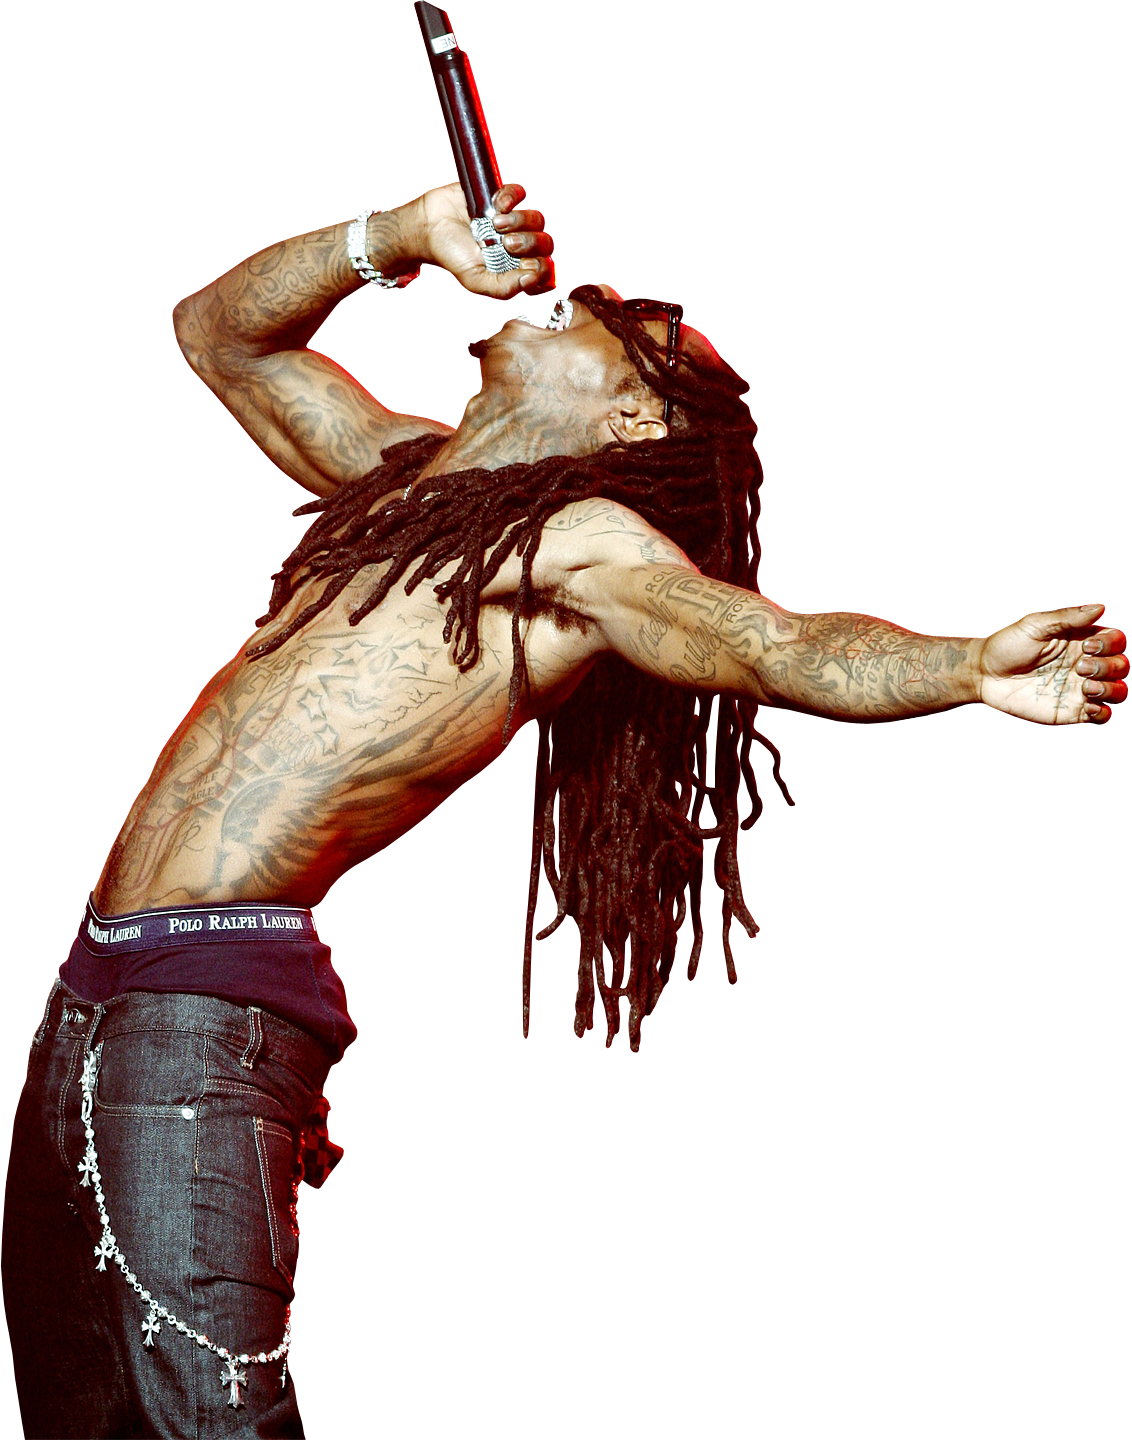 Lil Wayne-icon.png